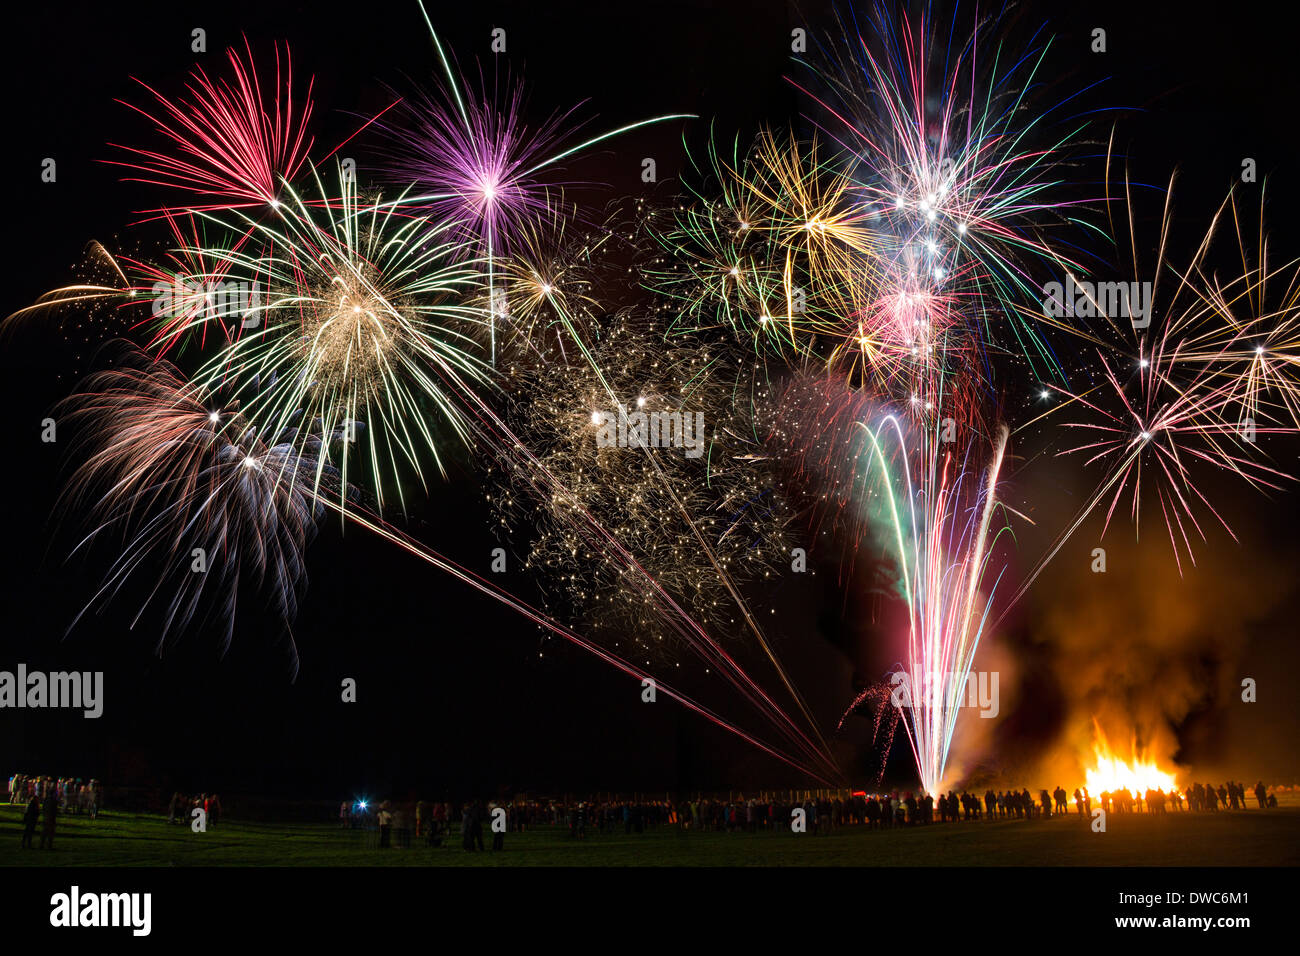 Fireworks Display on 5th November - England Stock Photo